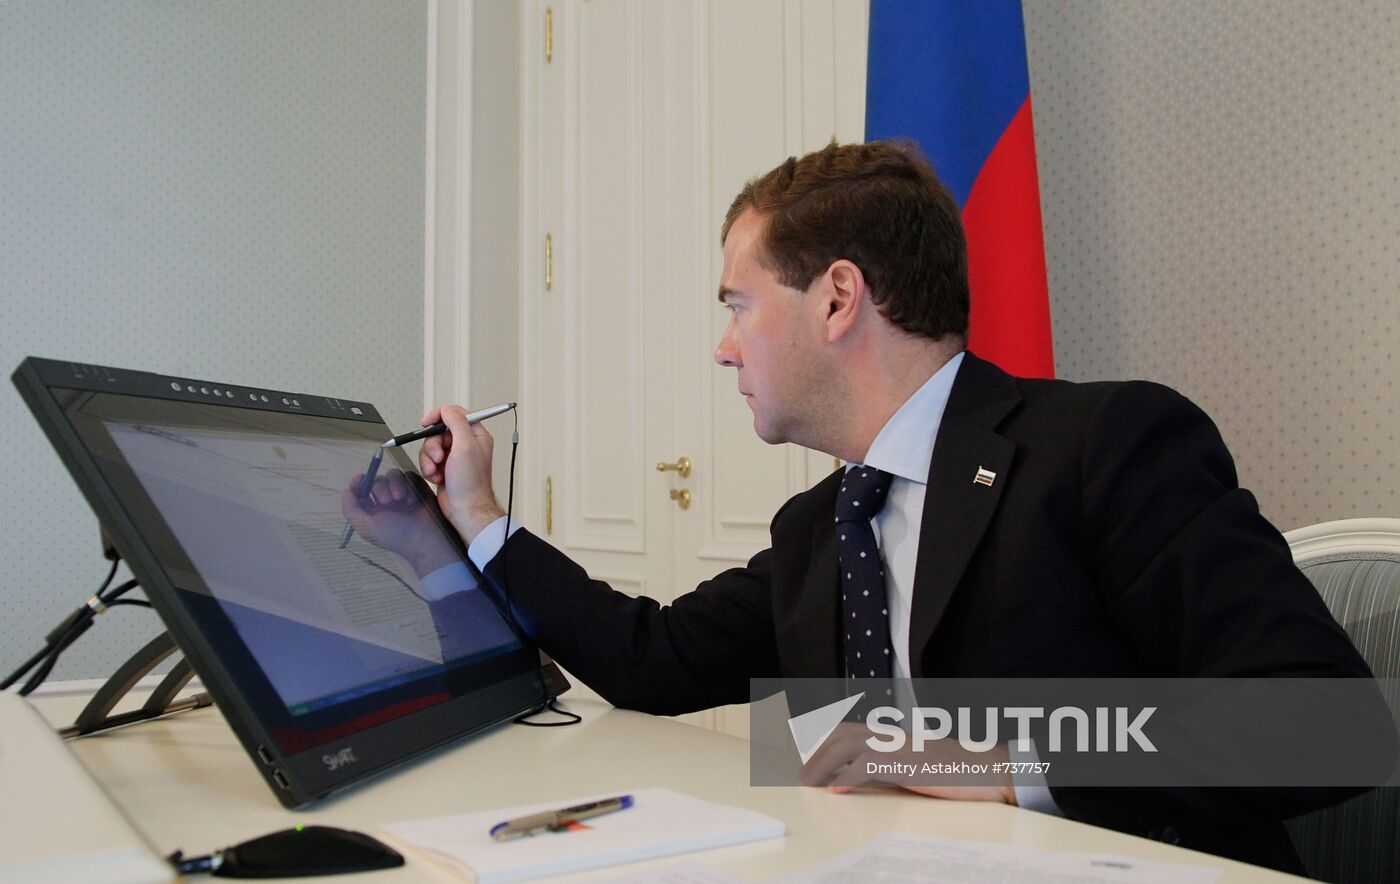 Dmitry Medvedev holds video conference with Alexander Karlin